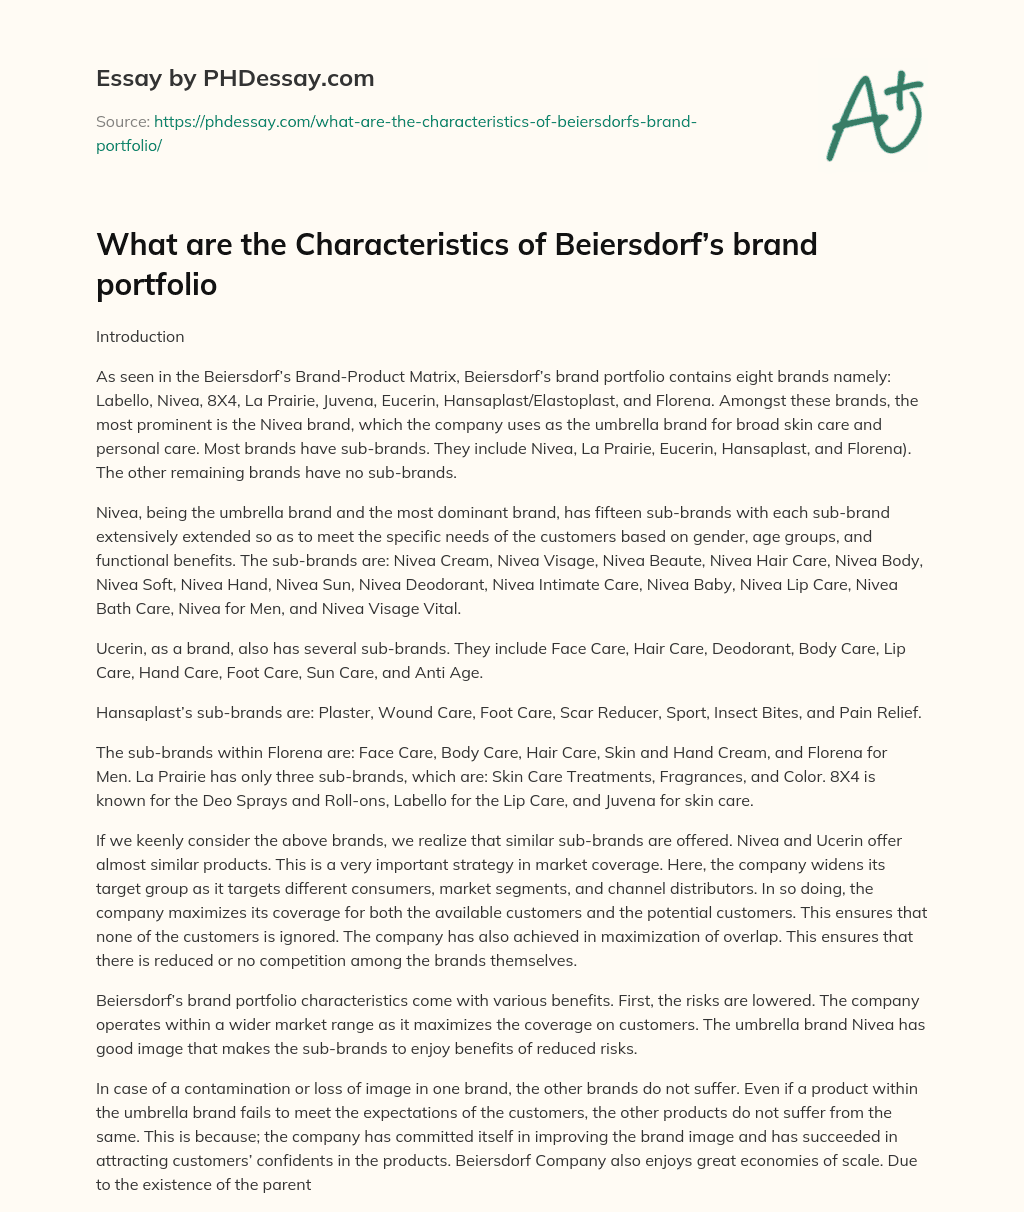 What are the Characteristics of Beiersdorf’s brand portfolio essay